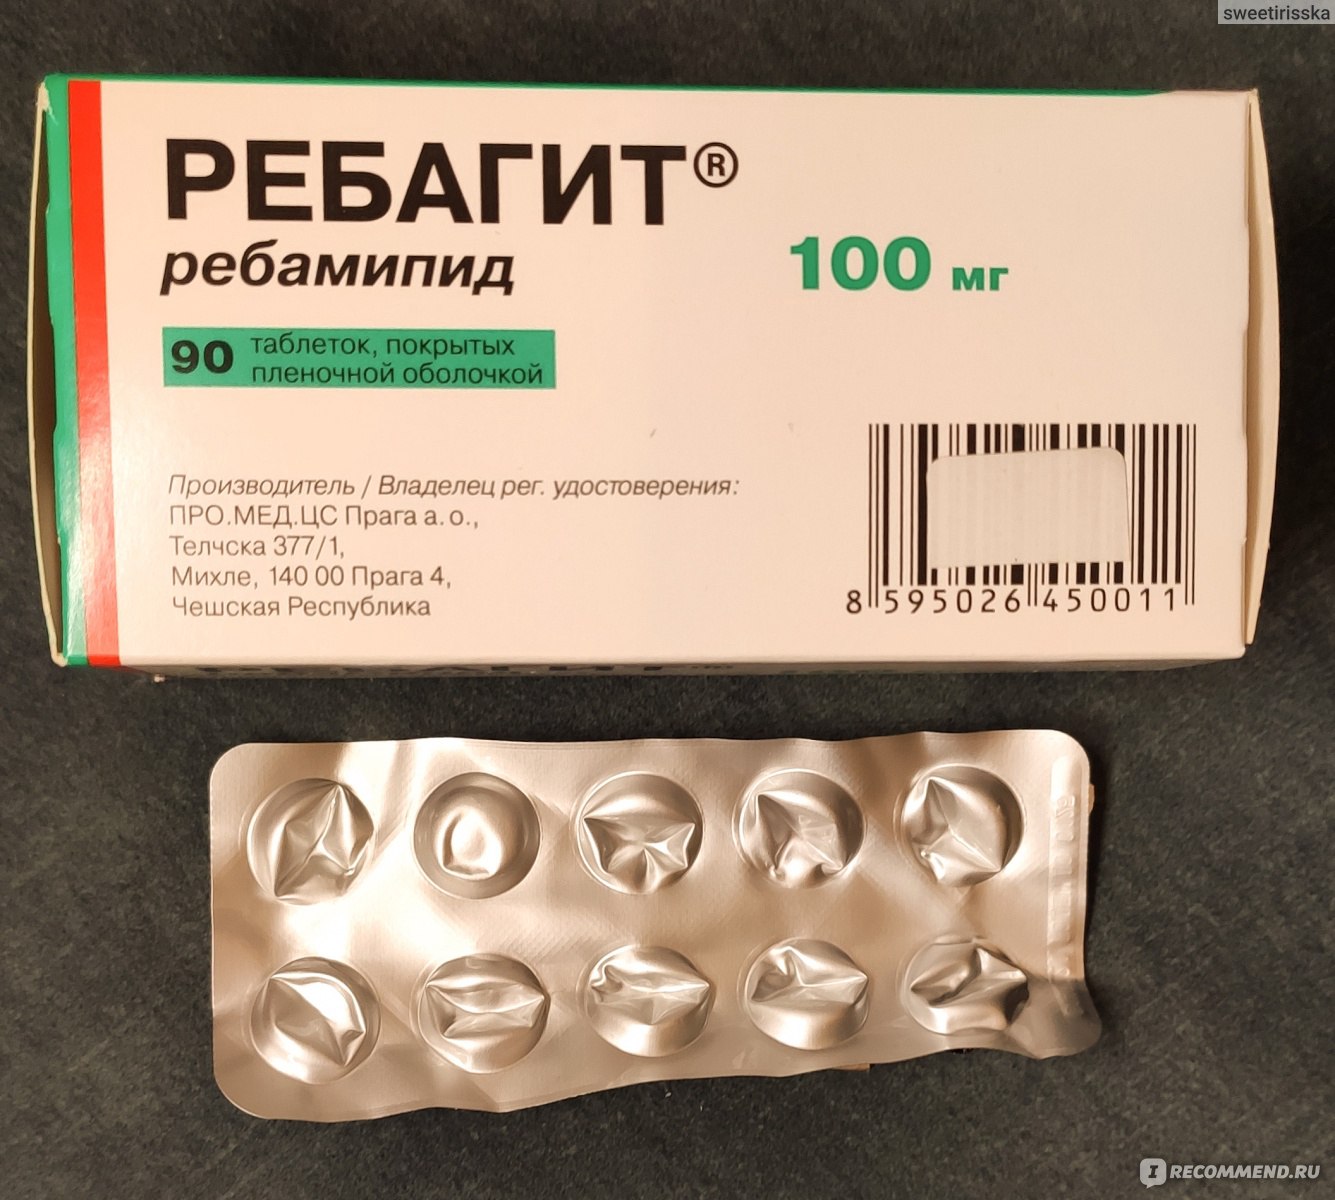 Лекарственный препарат Pro.Med.CS.Praha a.s. Ребагит (ребамипид) - «Ни .